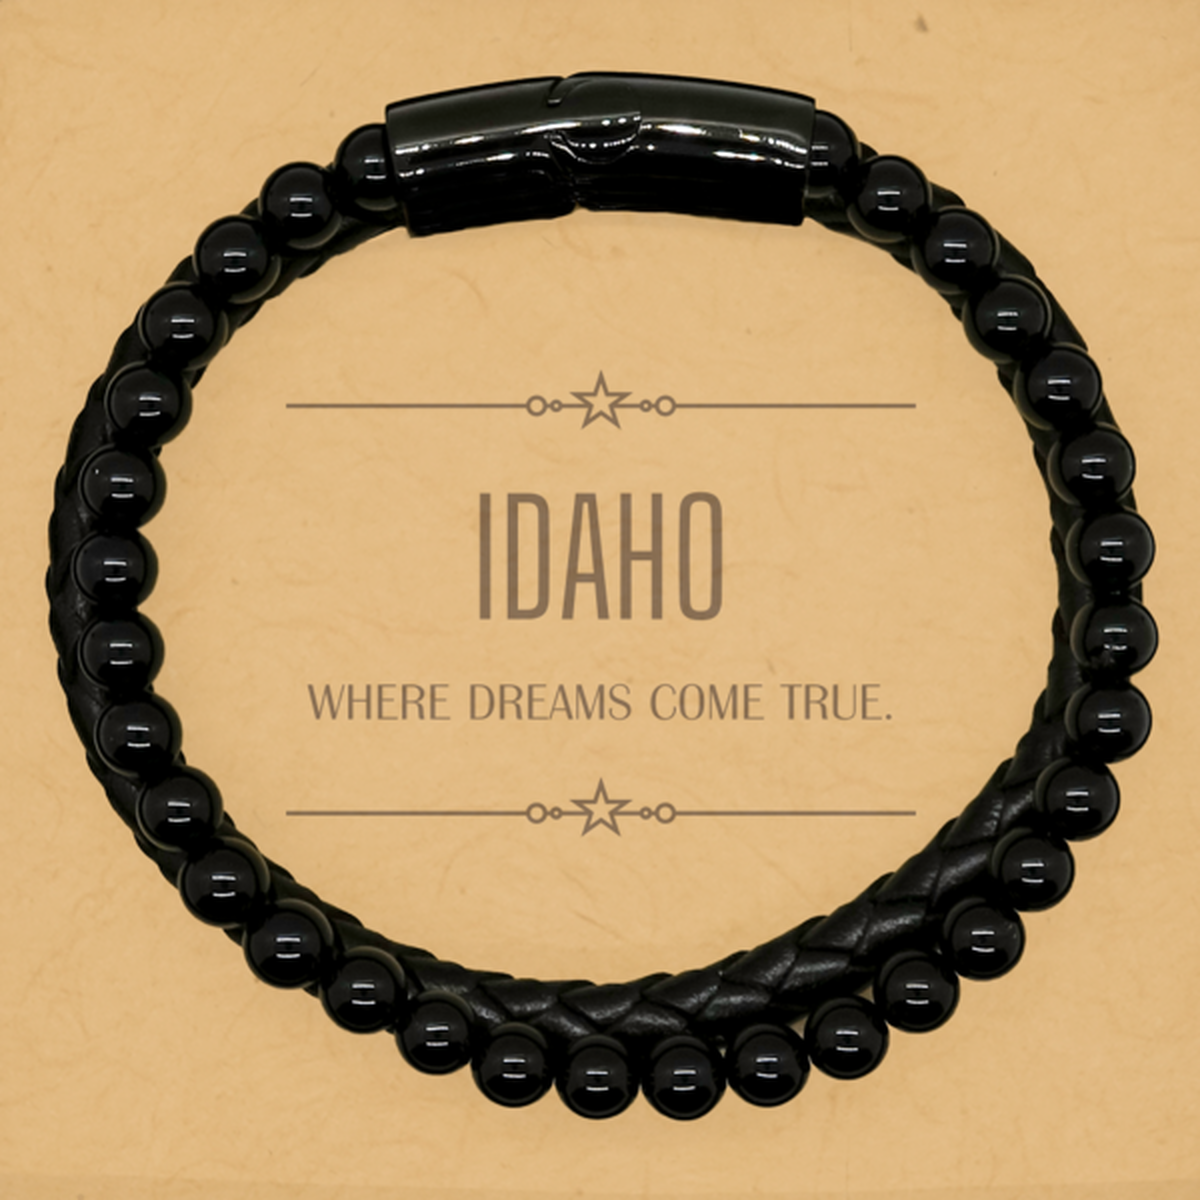 Love Idaho State Stone Leather Bracelets, Idaho Where dreams come true, Birthday Inspirational Gifts For Idaho Men, Women, Friends